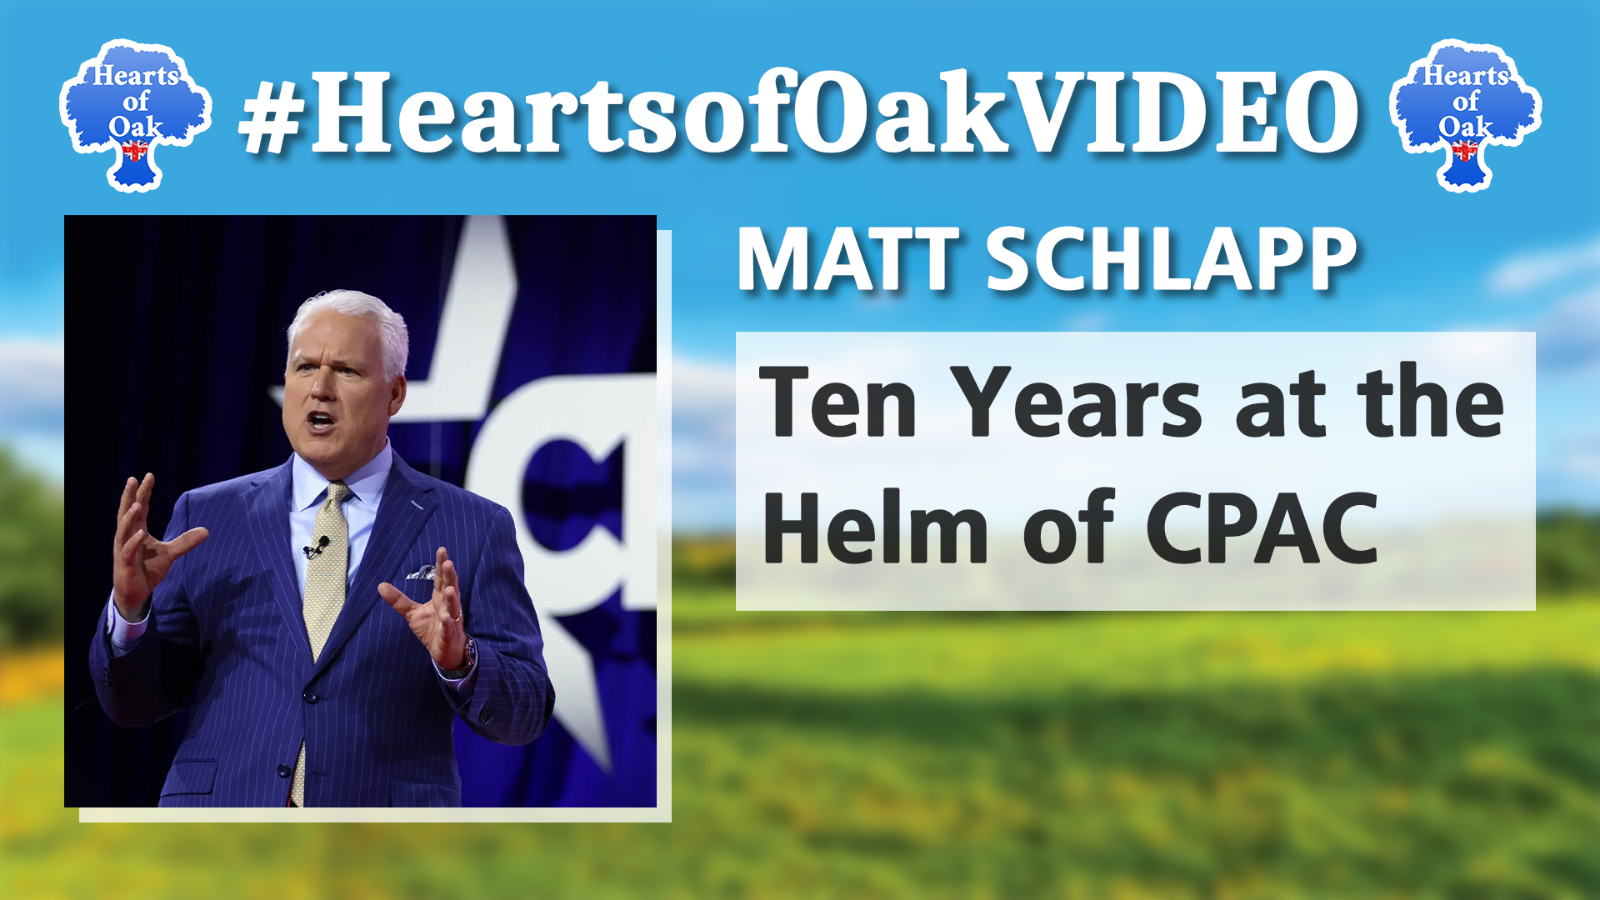 Matt Schlapp - Ten Years at the Helm of CPAC